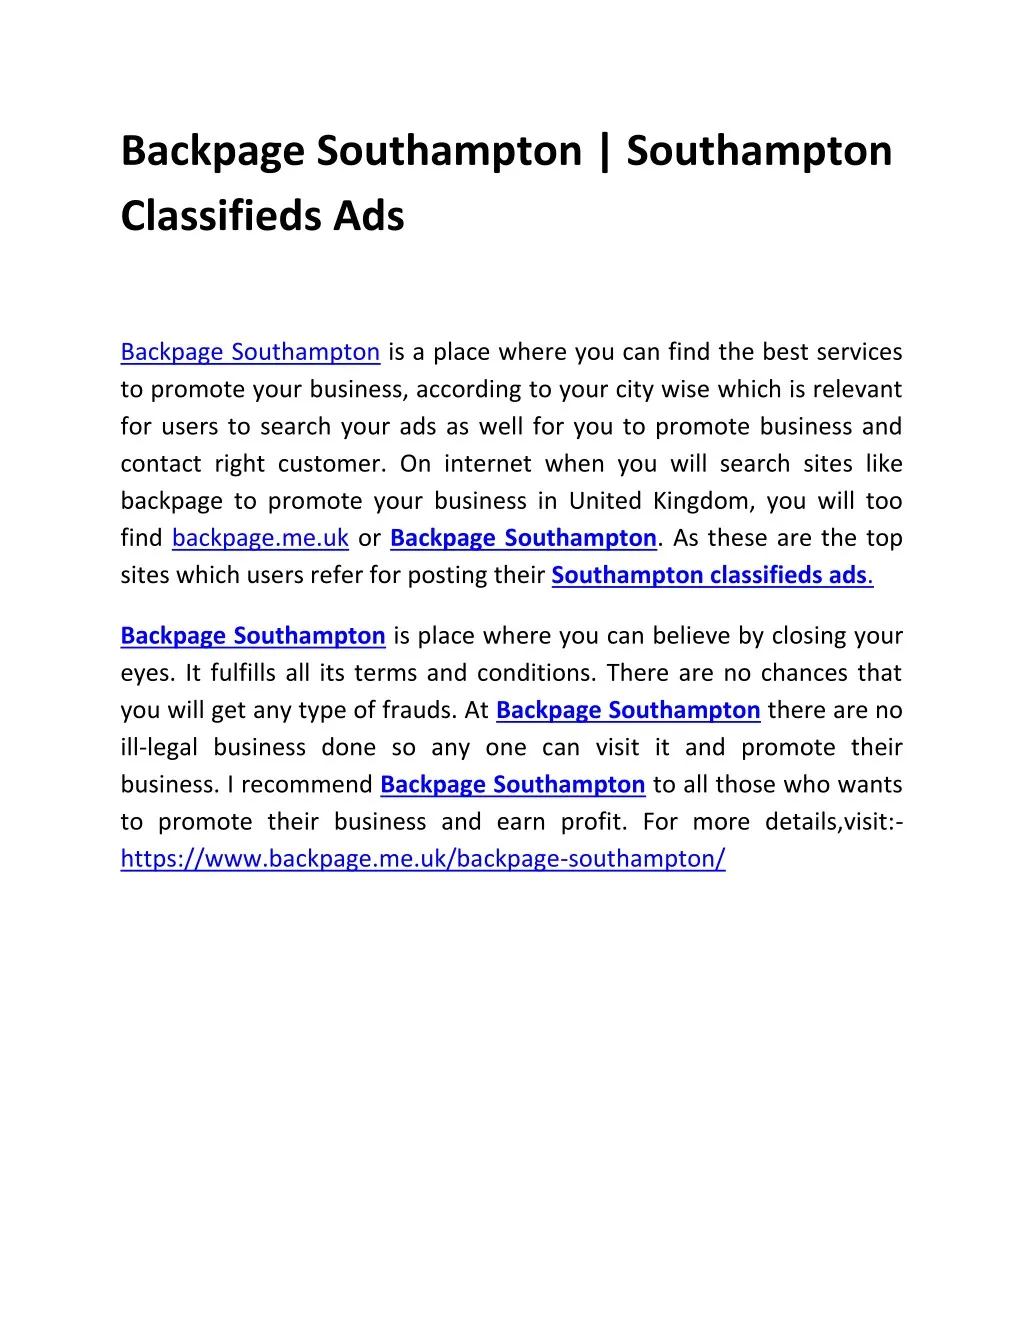 backpage southampton southampton classifieds ads